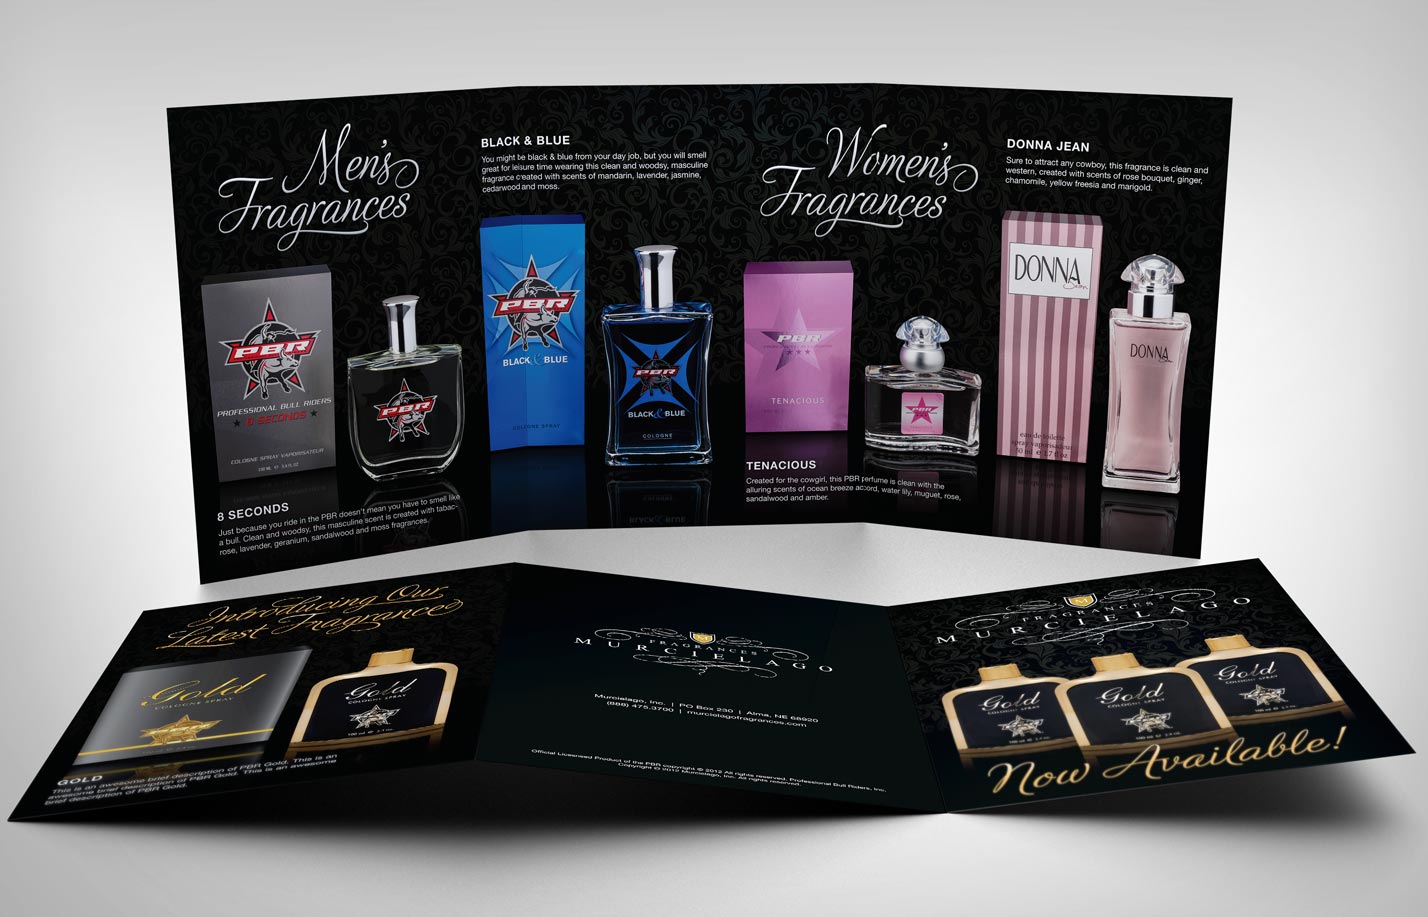 Murcielago Fragrances Brochure